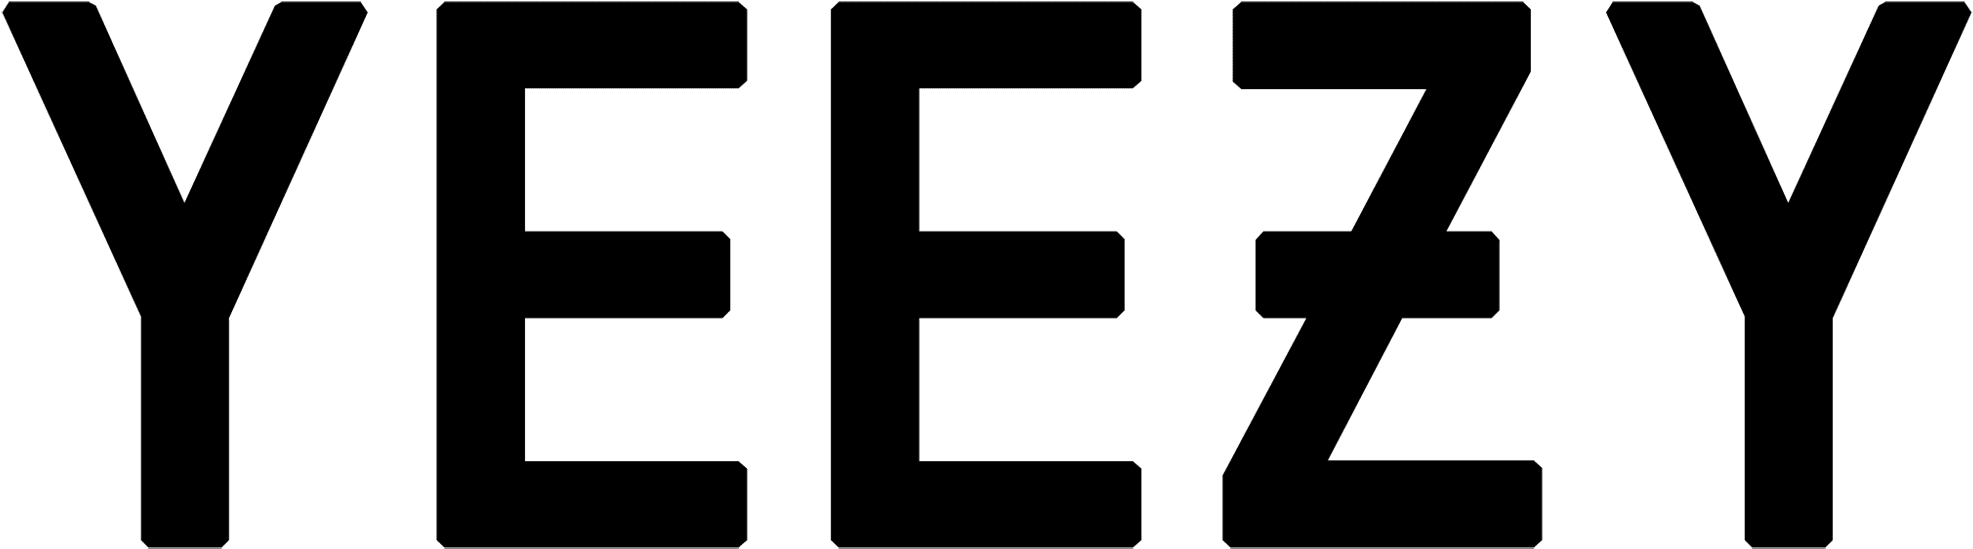 Yeezy logo PNG2